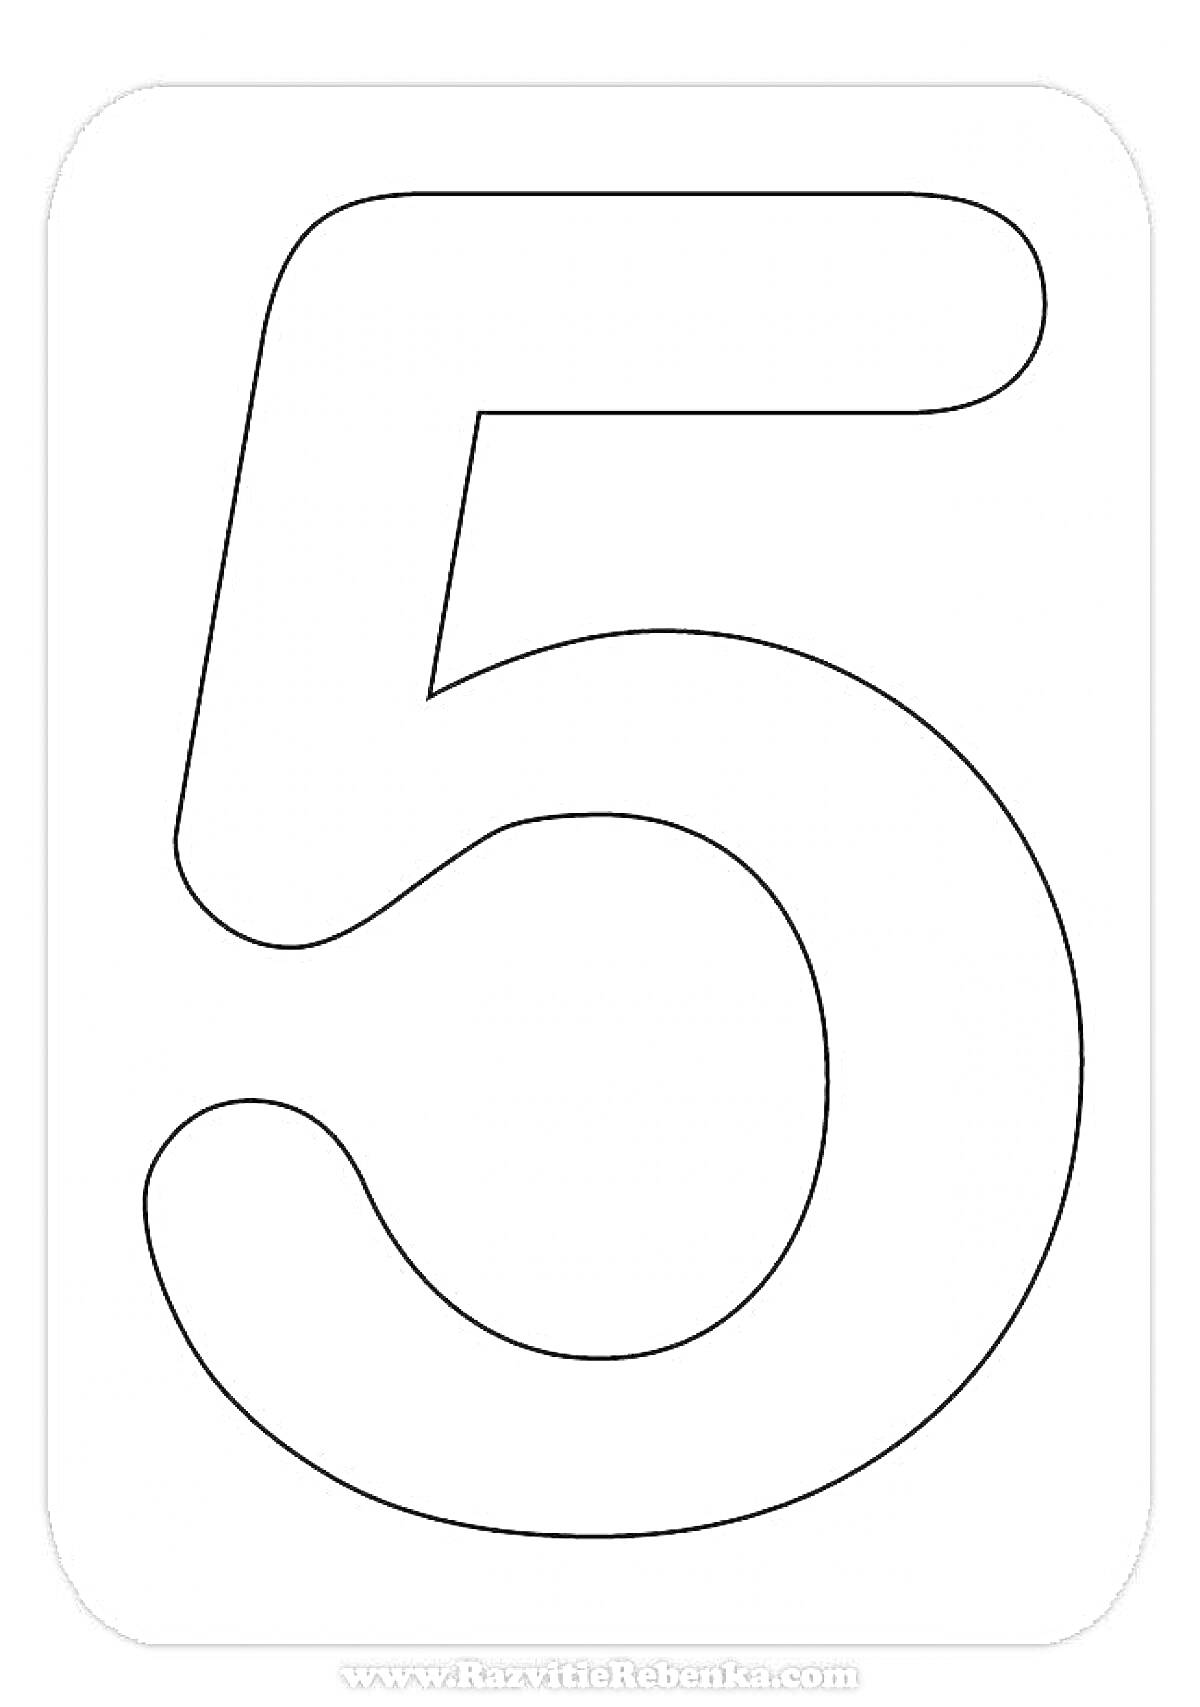 Раскраска Цифра 5 на сером фоне для раскрашивания